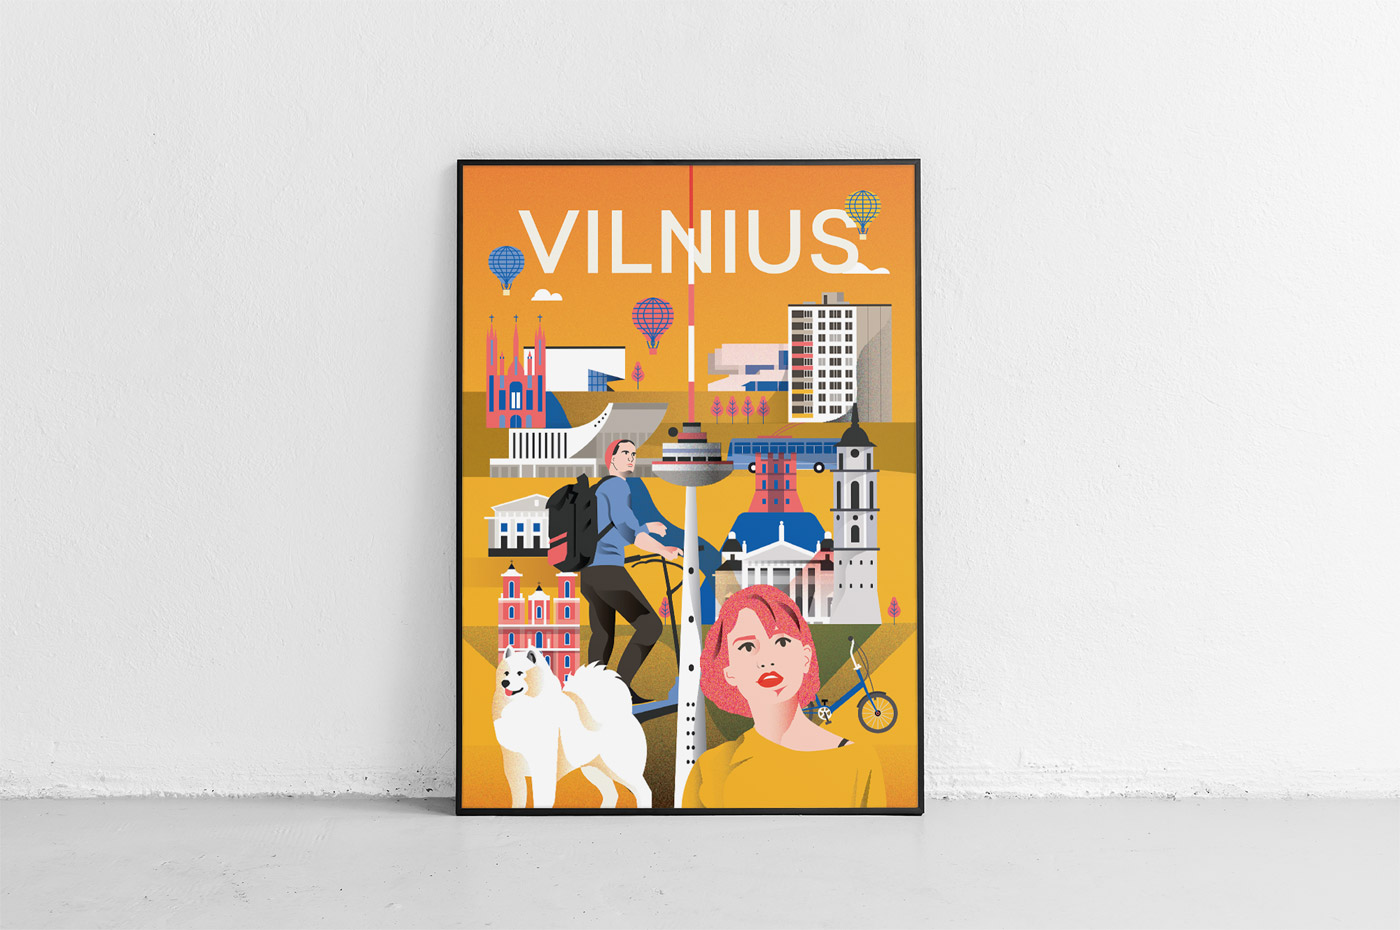 Vilnius city poster by Arunas Kacinskas